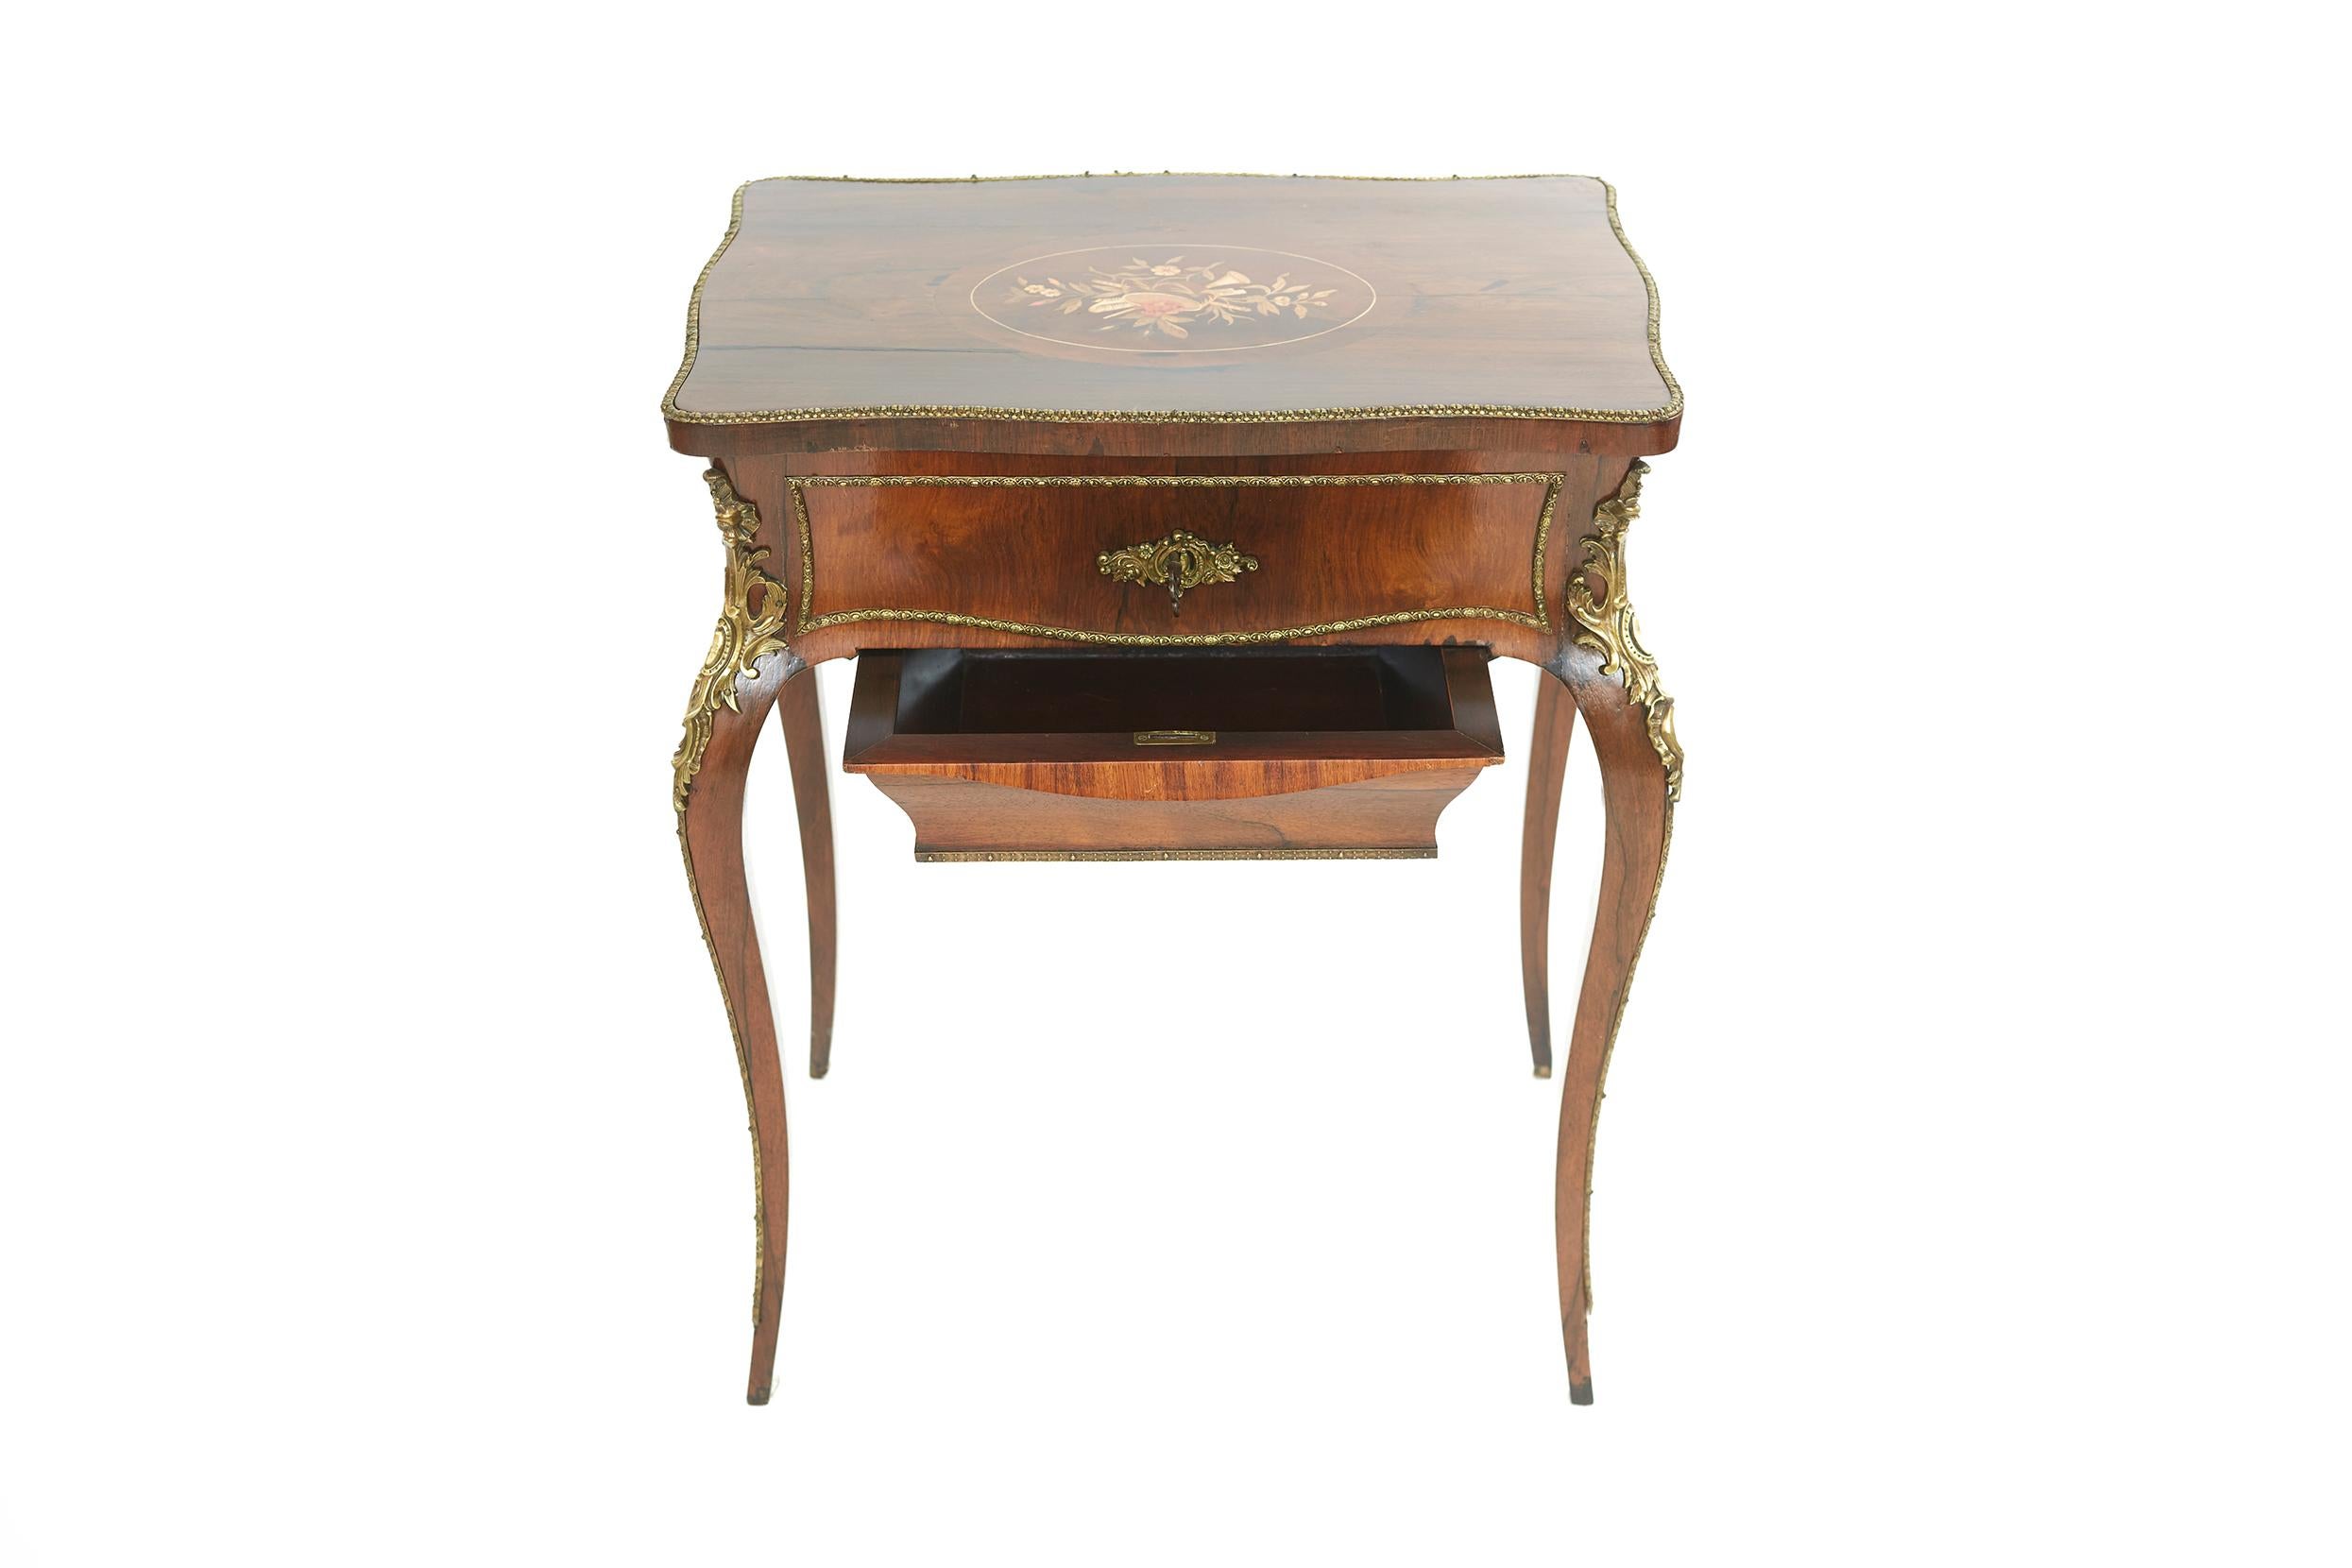 Italian 19th Century Regency Revival Brass Mounted Table